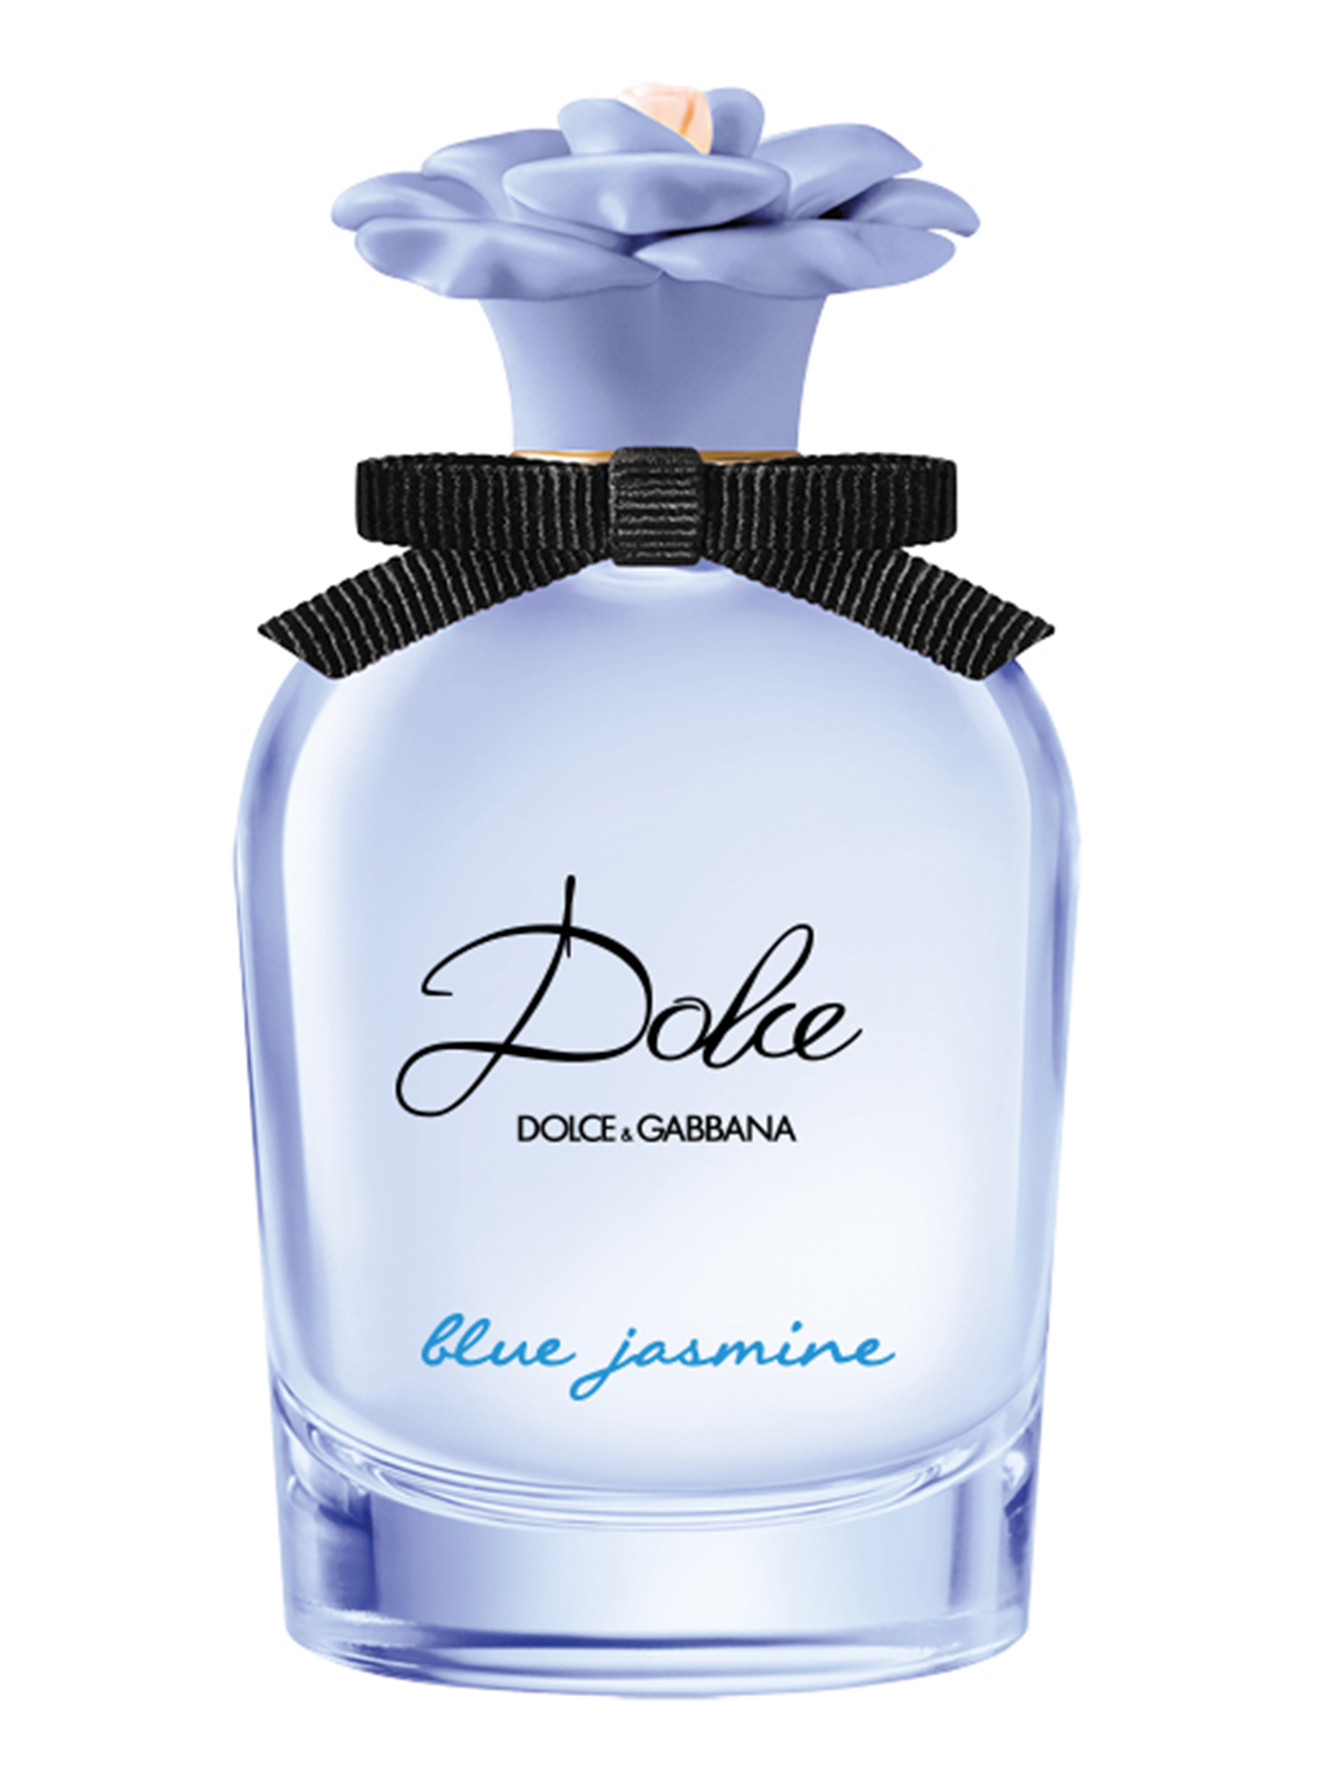 Парфюмерная вода Dolce Blue Jasmine, 30 мл - Общий вид